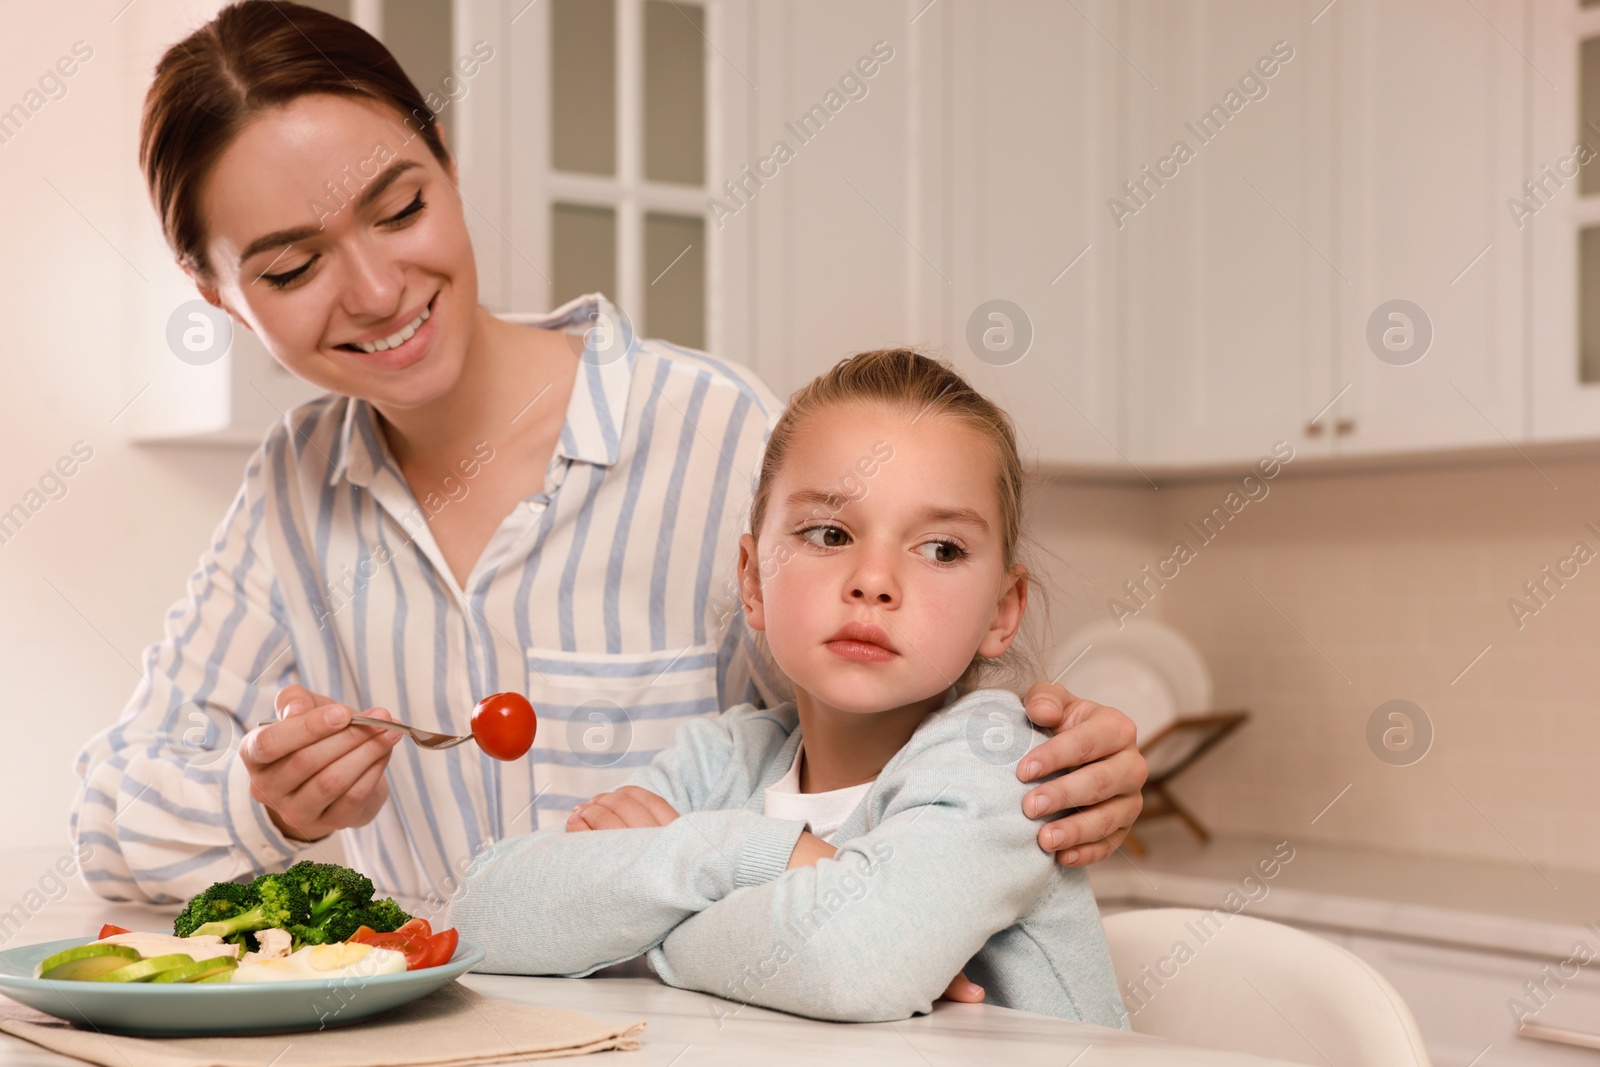 Photo of Mother feeding her daughter in kitchen. Little girl refusing to eat dinner